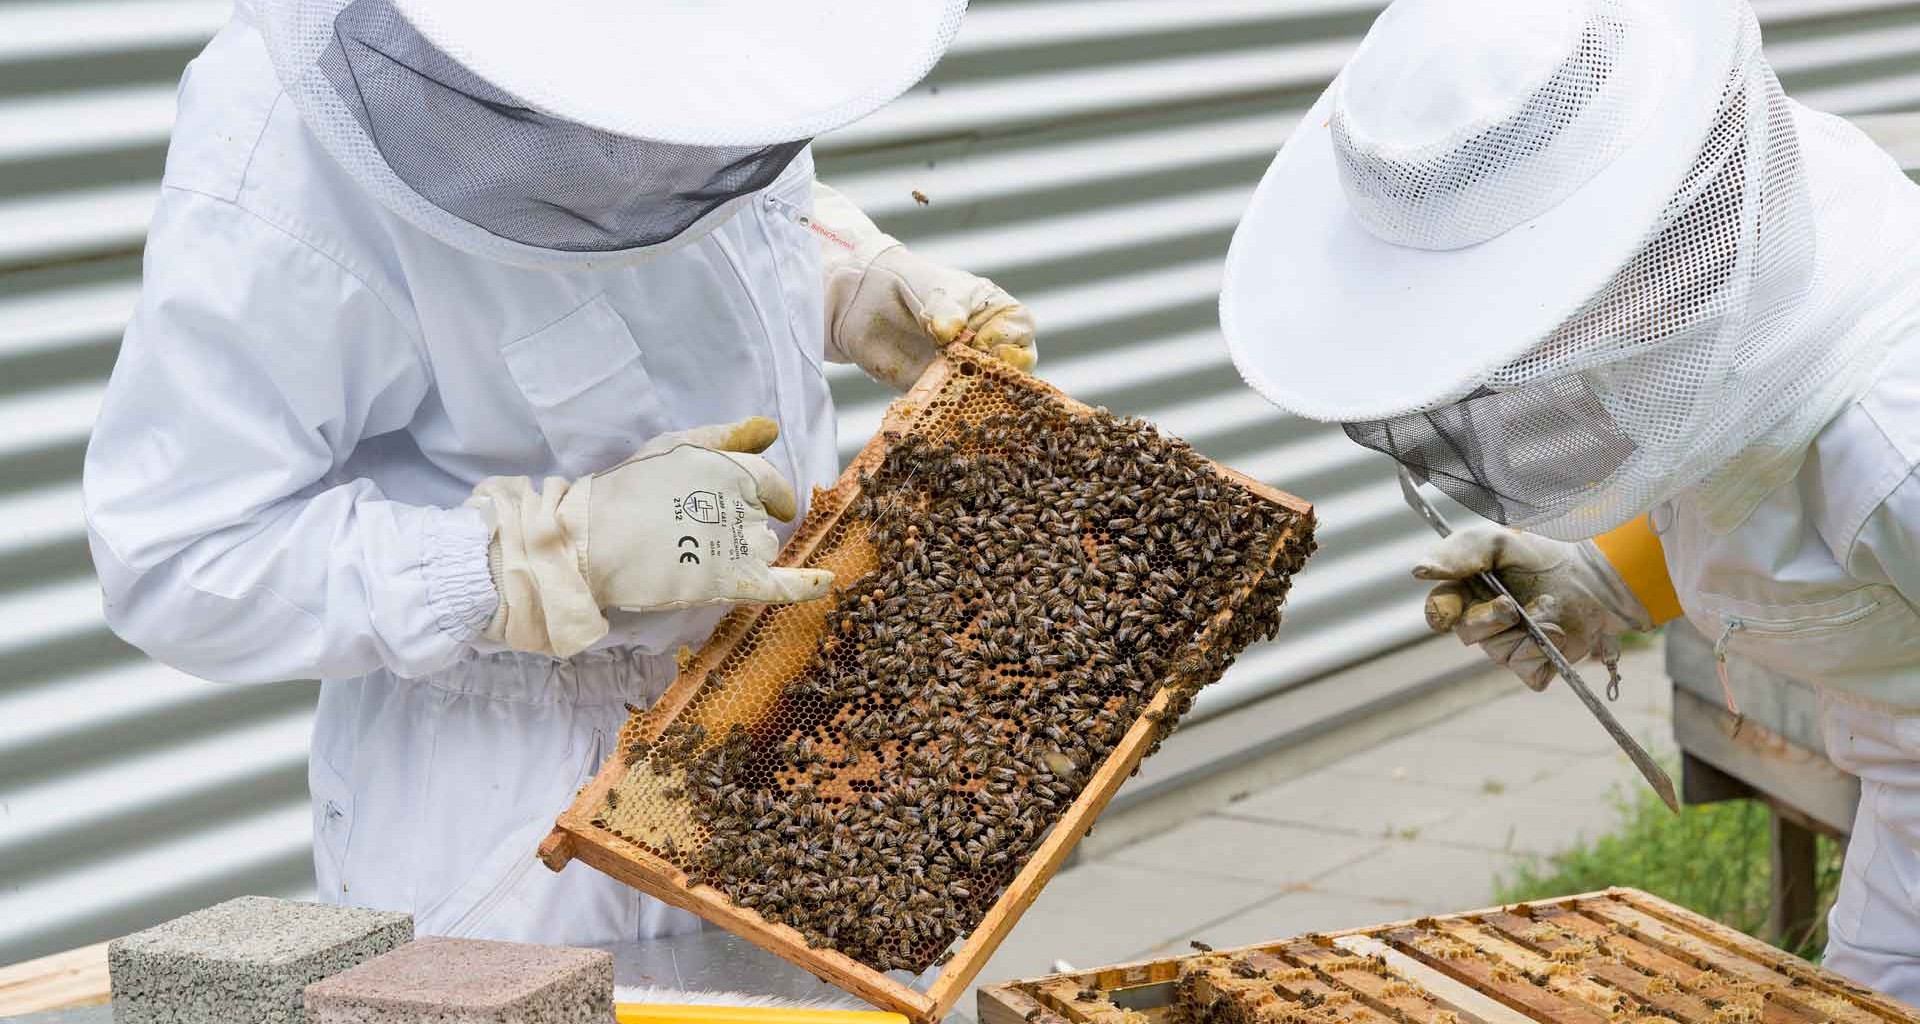 Alumnos de Mercadotecnia del Tec realizan estrategias para apicultores de Jalisco.